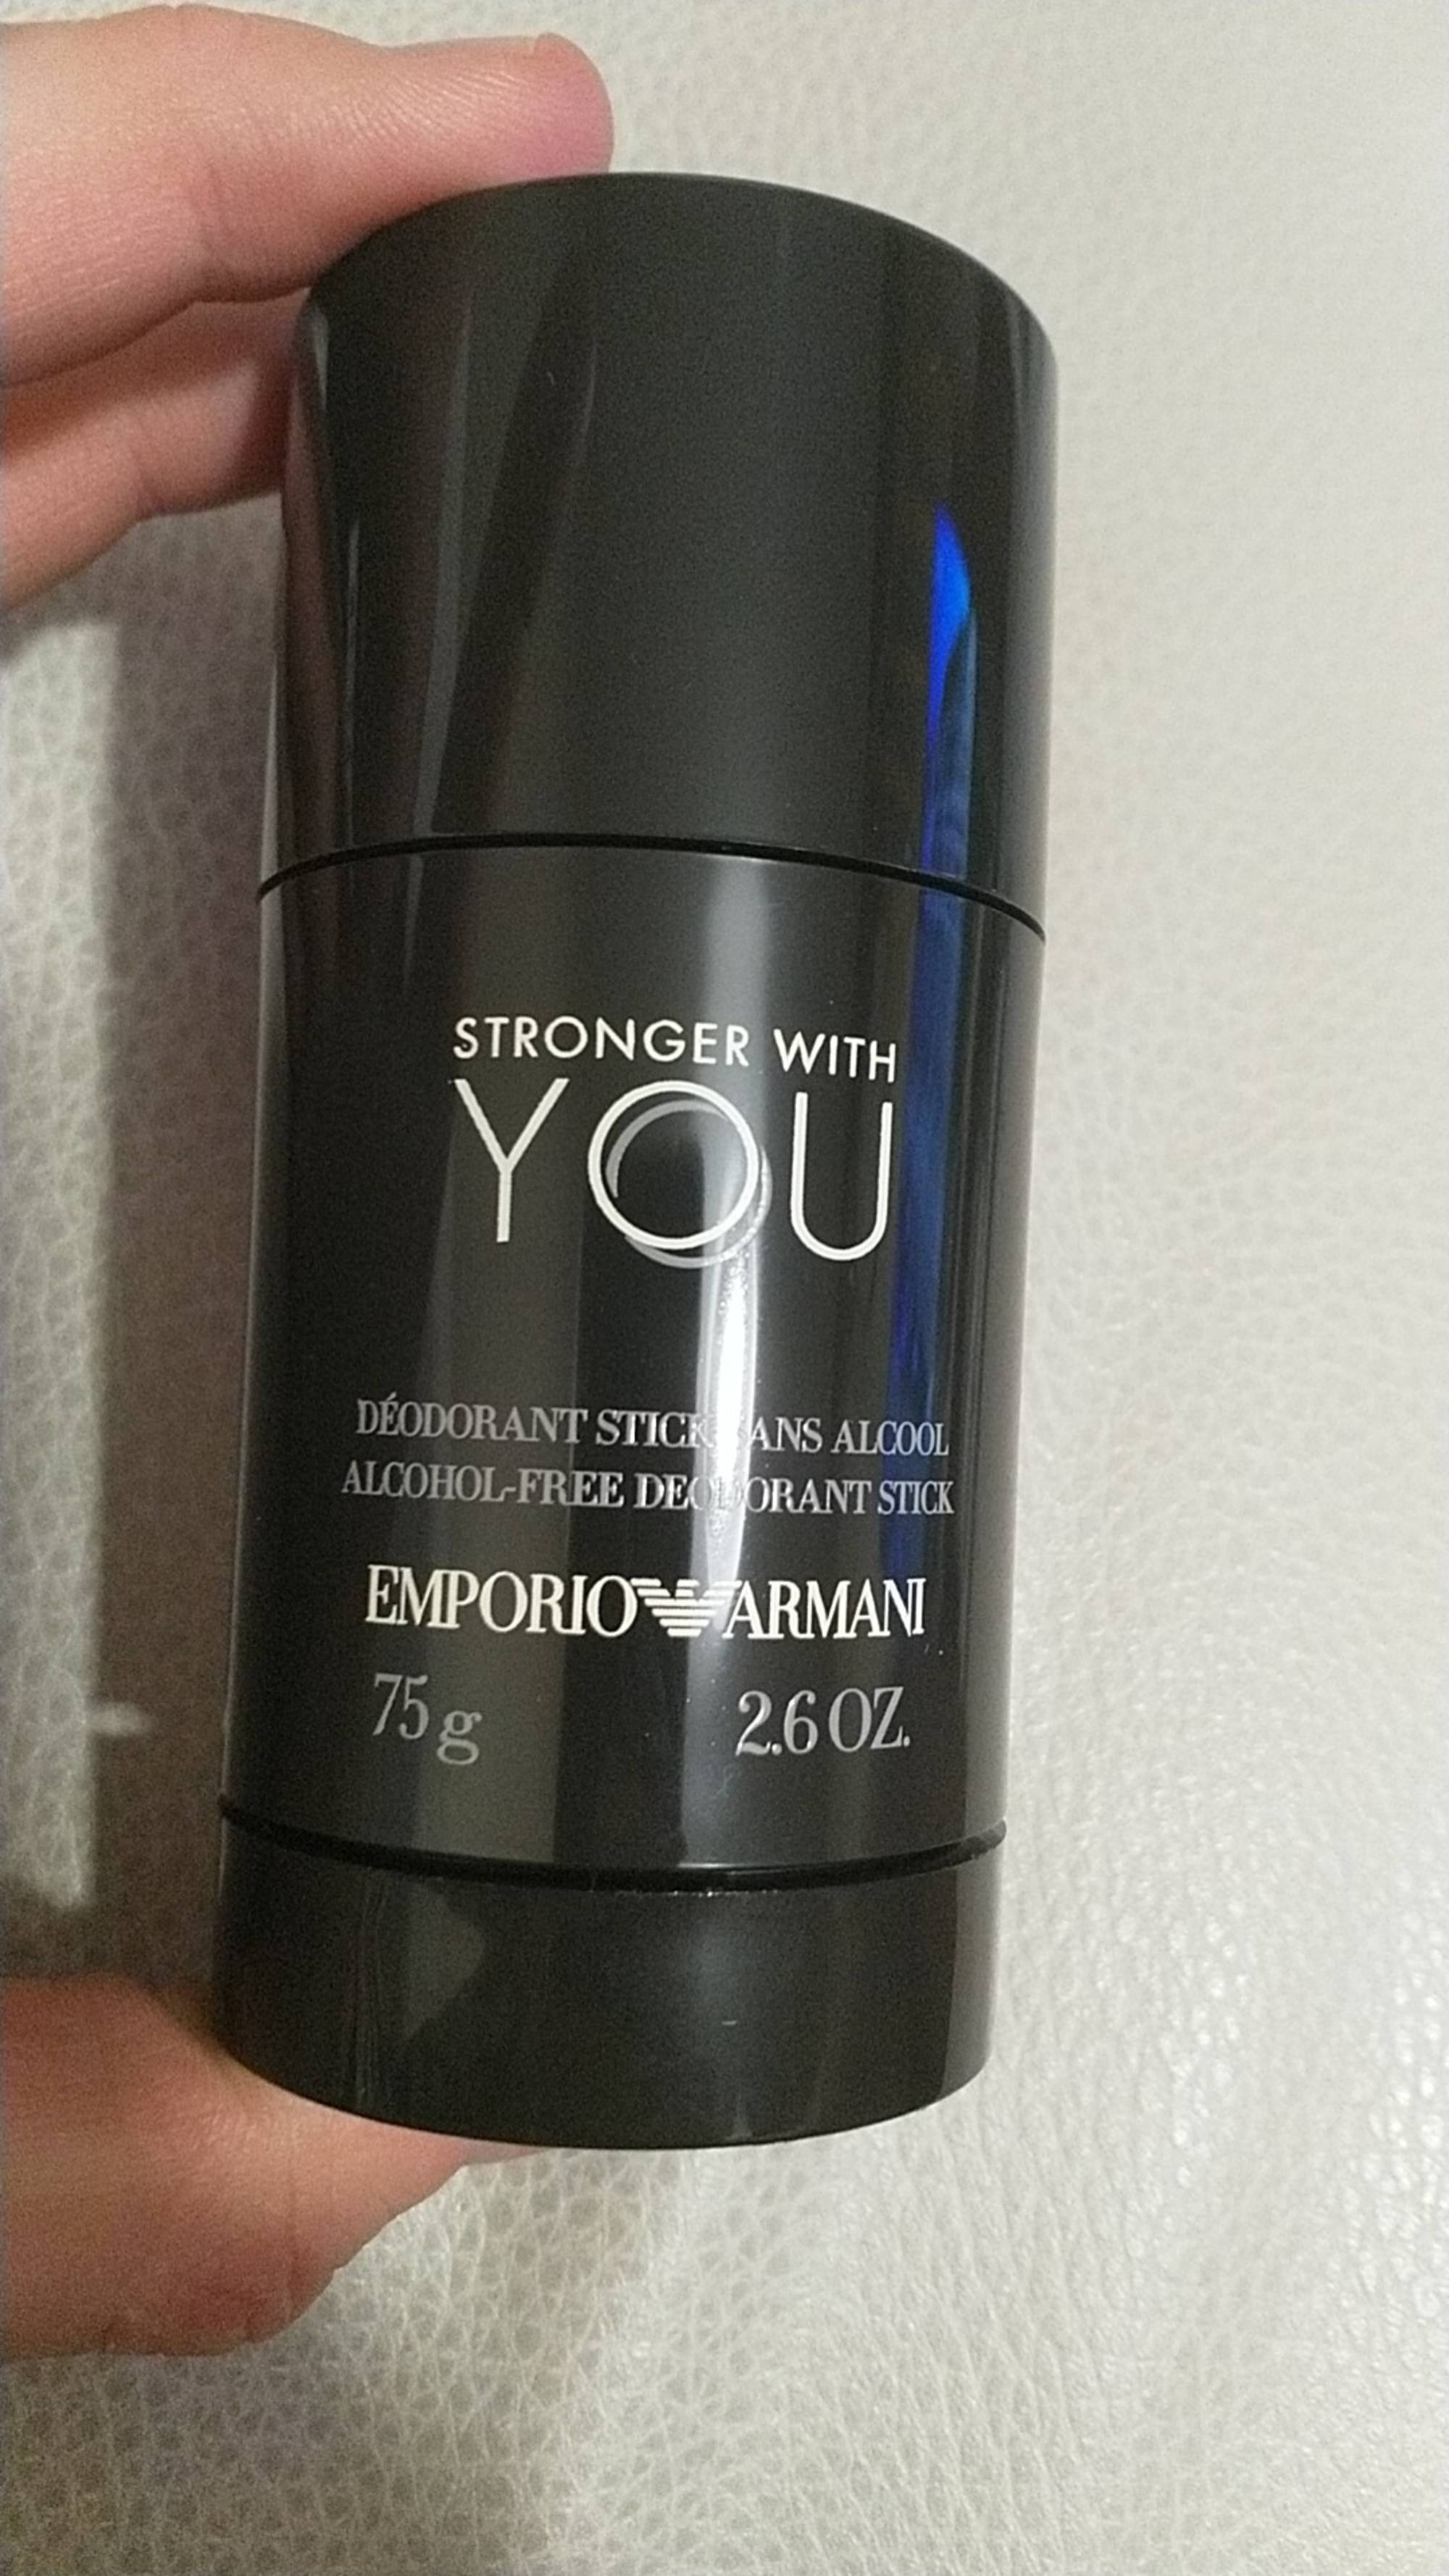 EMPORIO ARMANI - Stronger with you - Déodorant stick sans alcool